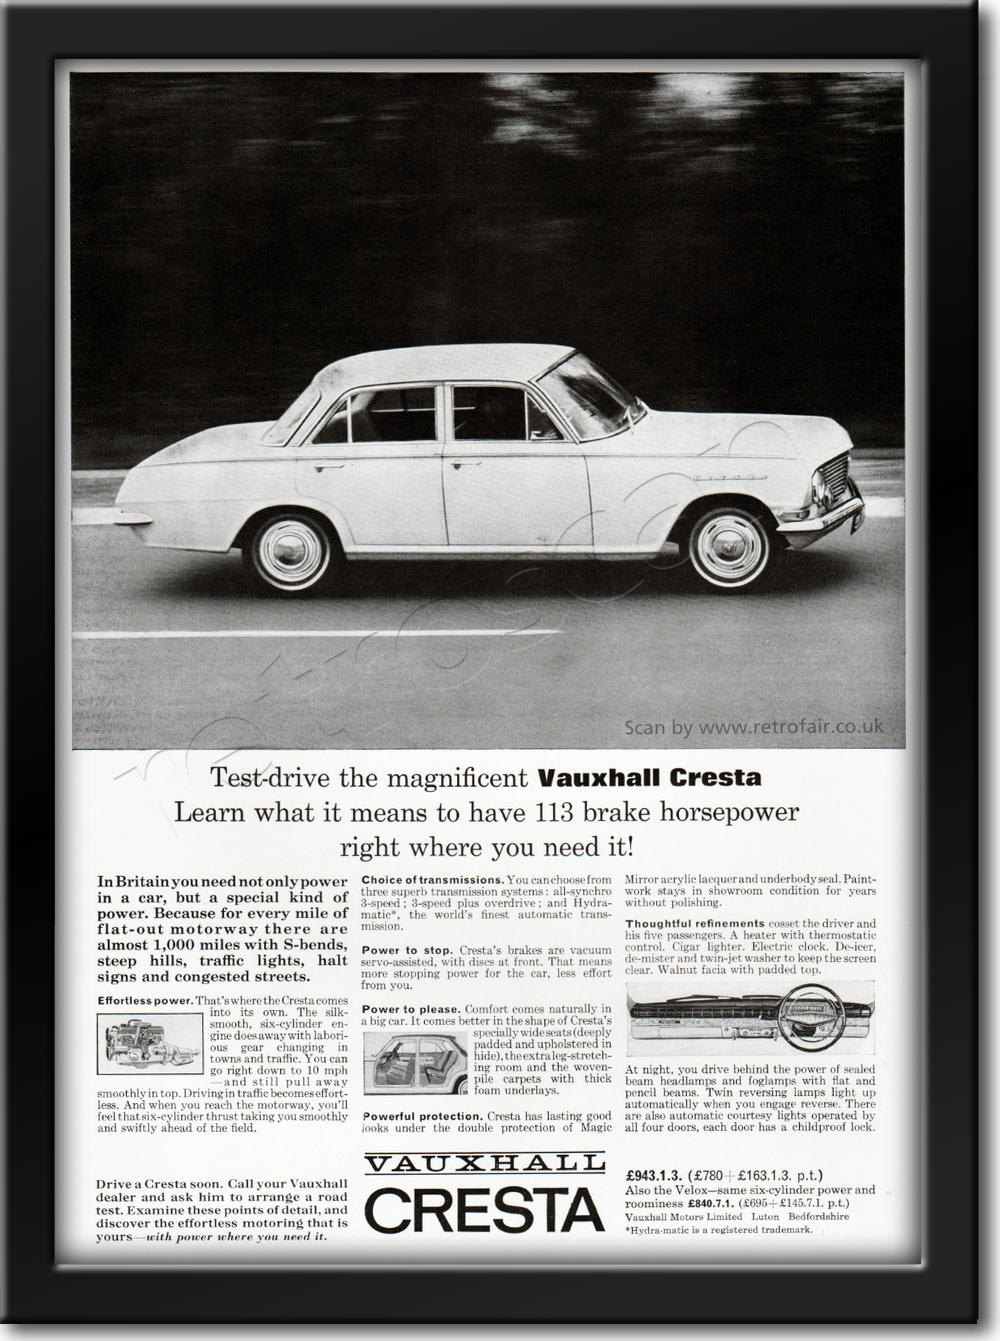 1964 vintage Vauxhall Cresta advert